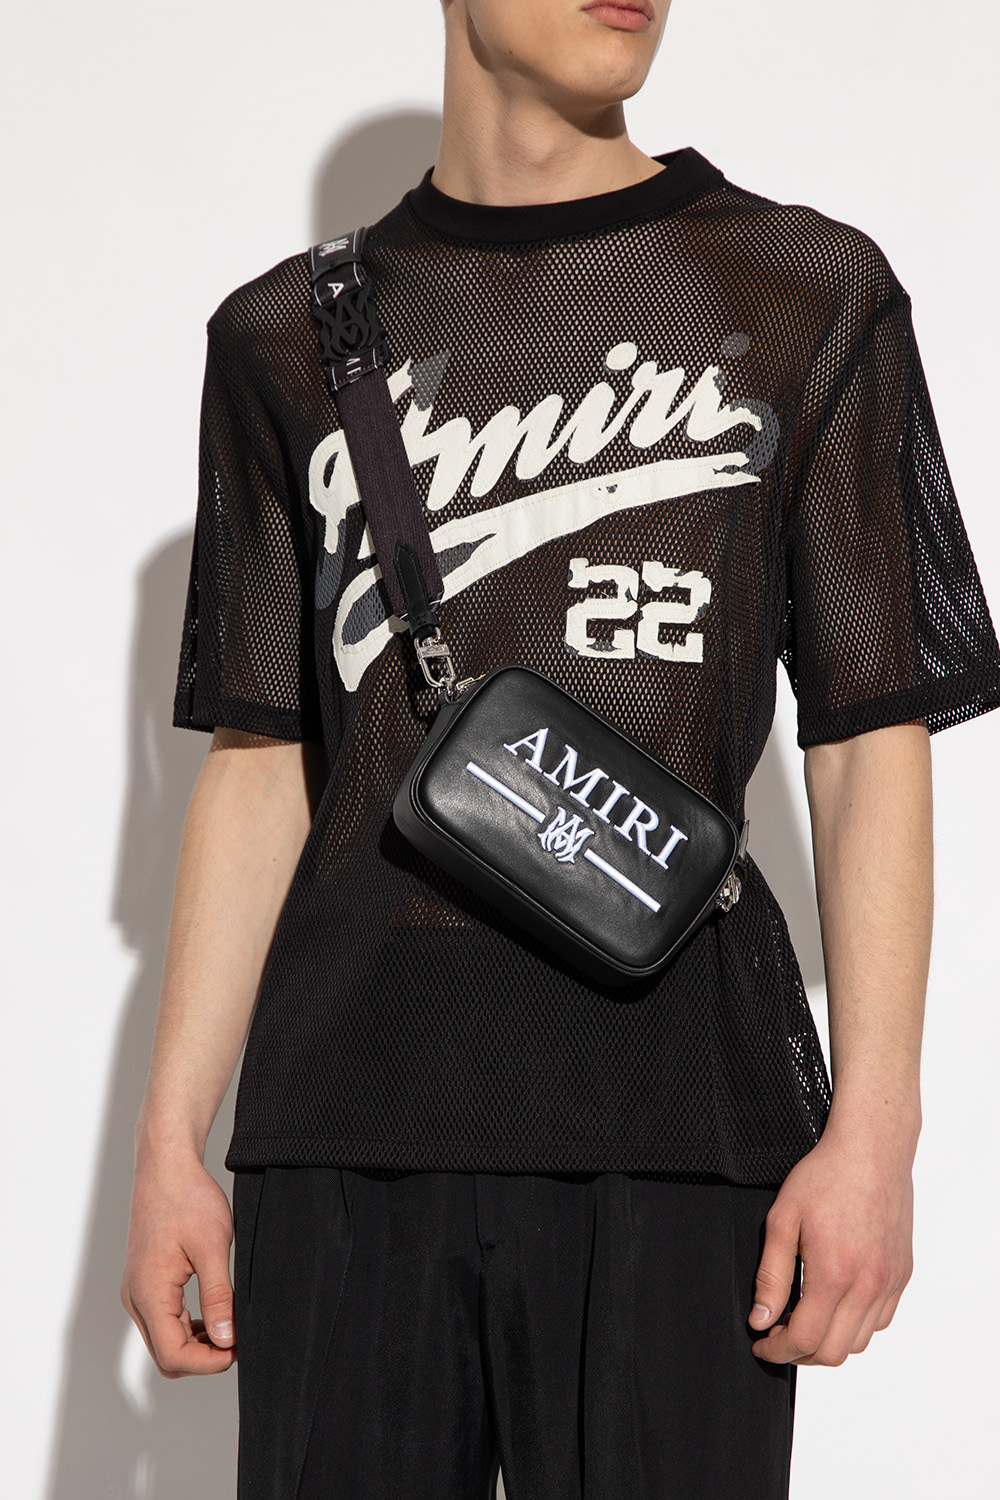 Amiri Leather shoulder bag | Men's Bags | Vitkac